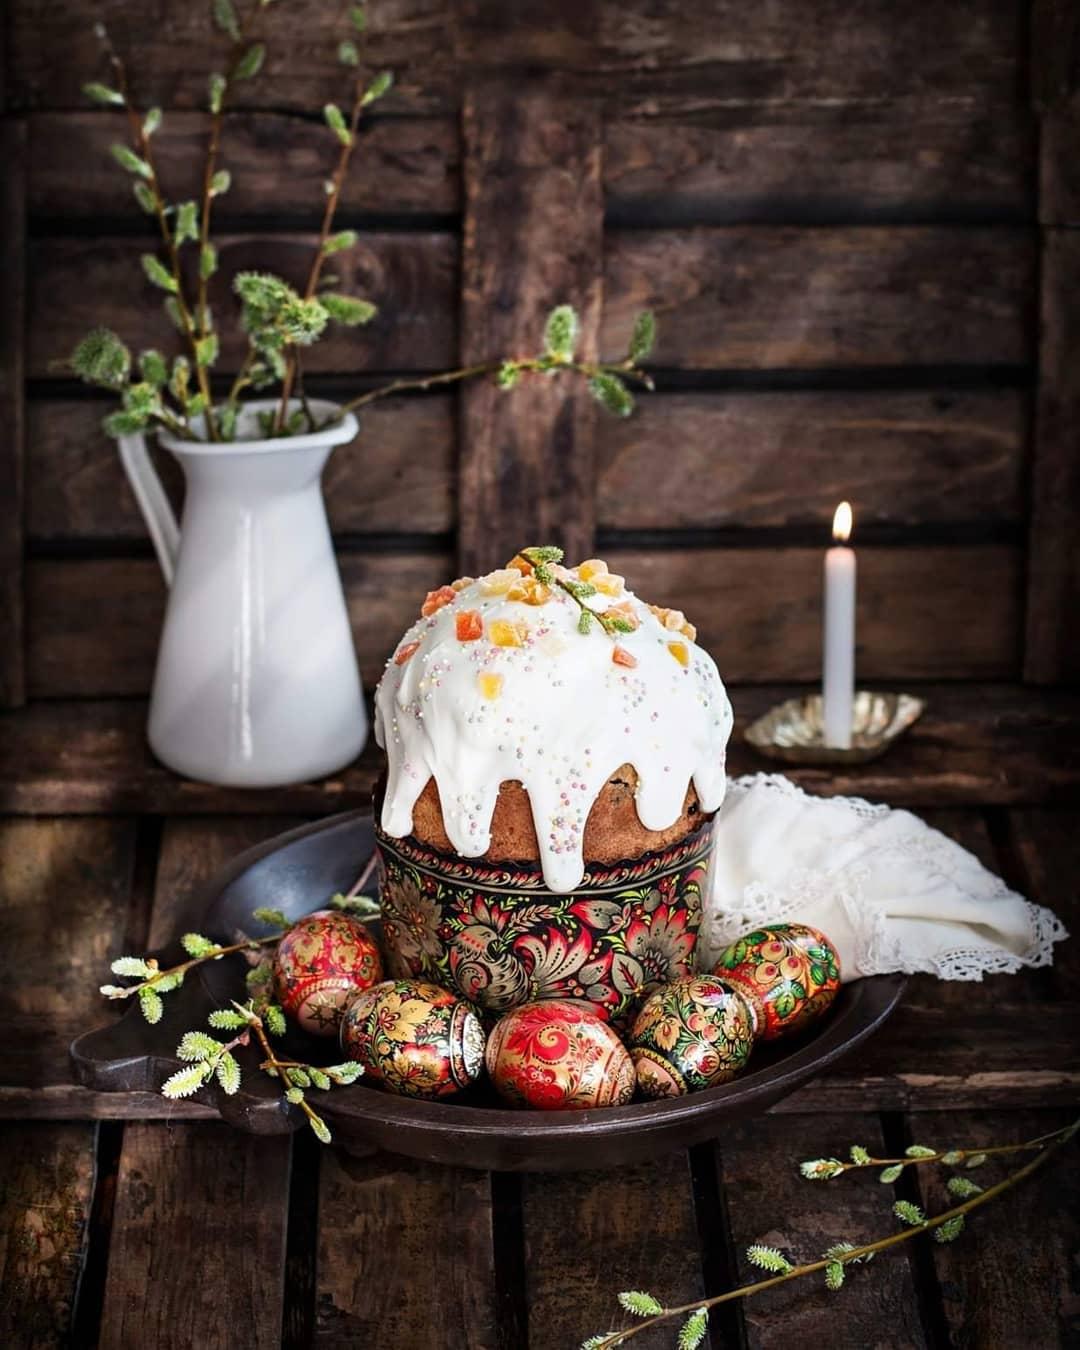 Автор рецепта Анжелика Зоркина / фото © Instagram (запрещен на территории Российской Федерации) / my_nordic_kitchen_/